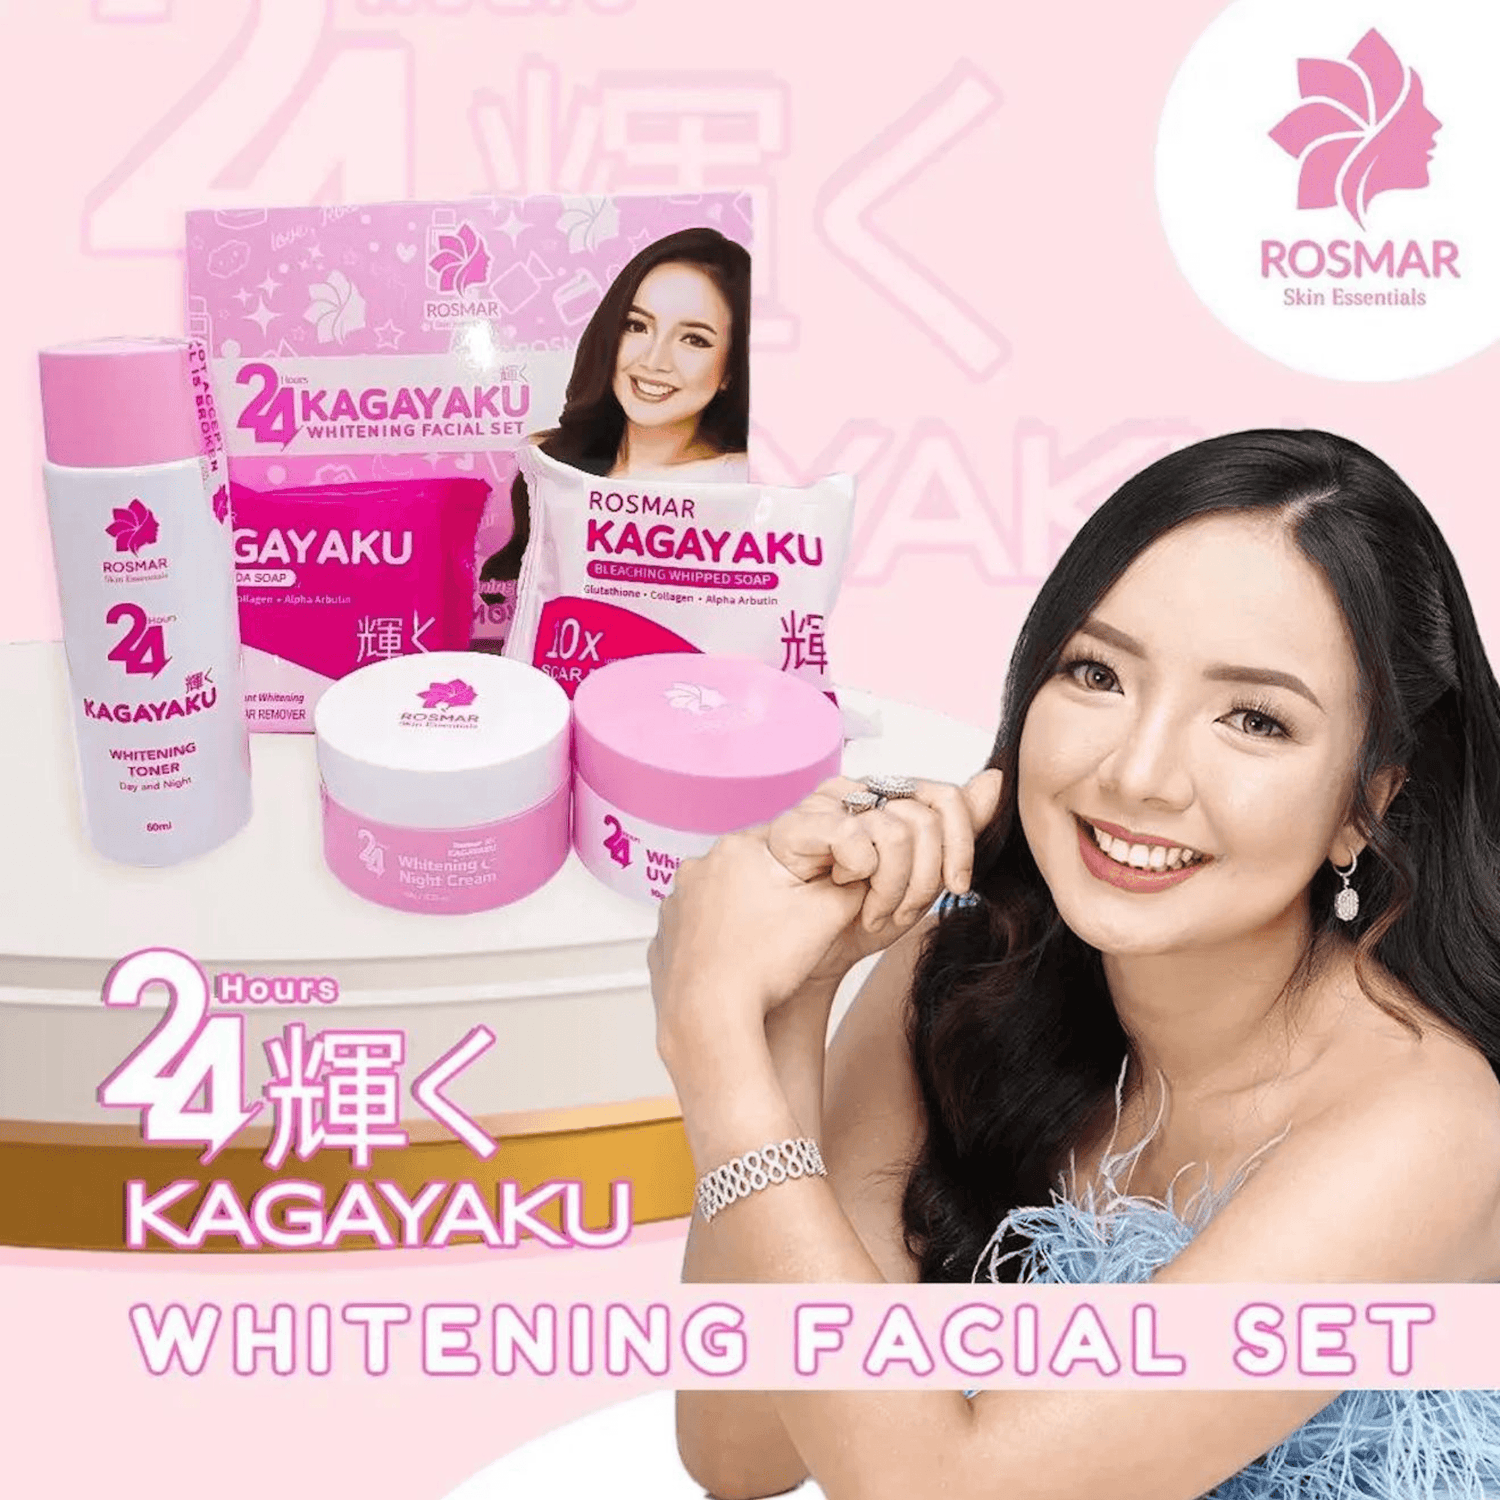 ROSMAR: Skin essential 24hours KAGAYAKU WHITENING FACIAL SET. - True Beauty Skin Essentials